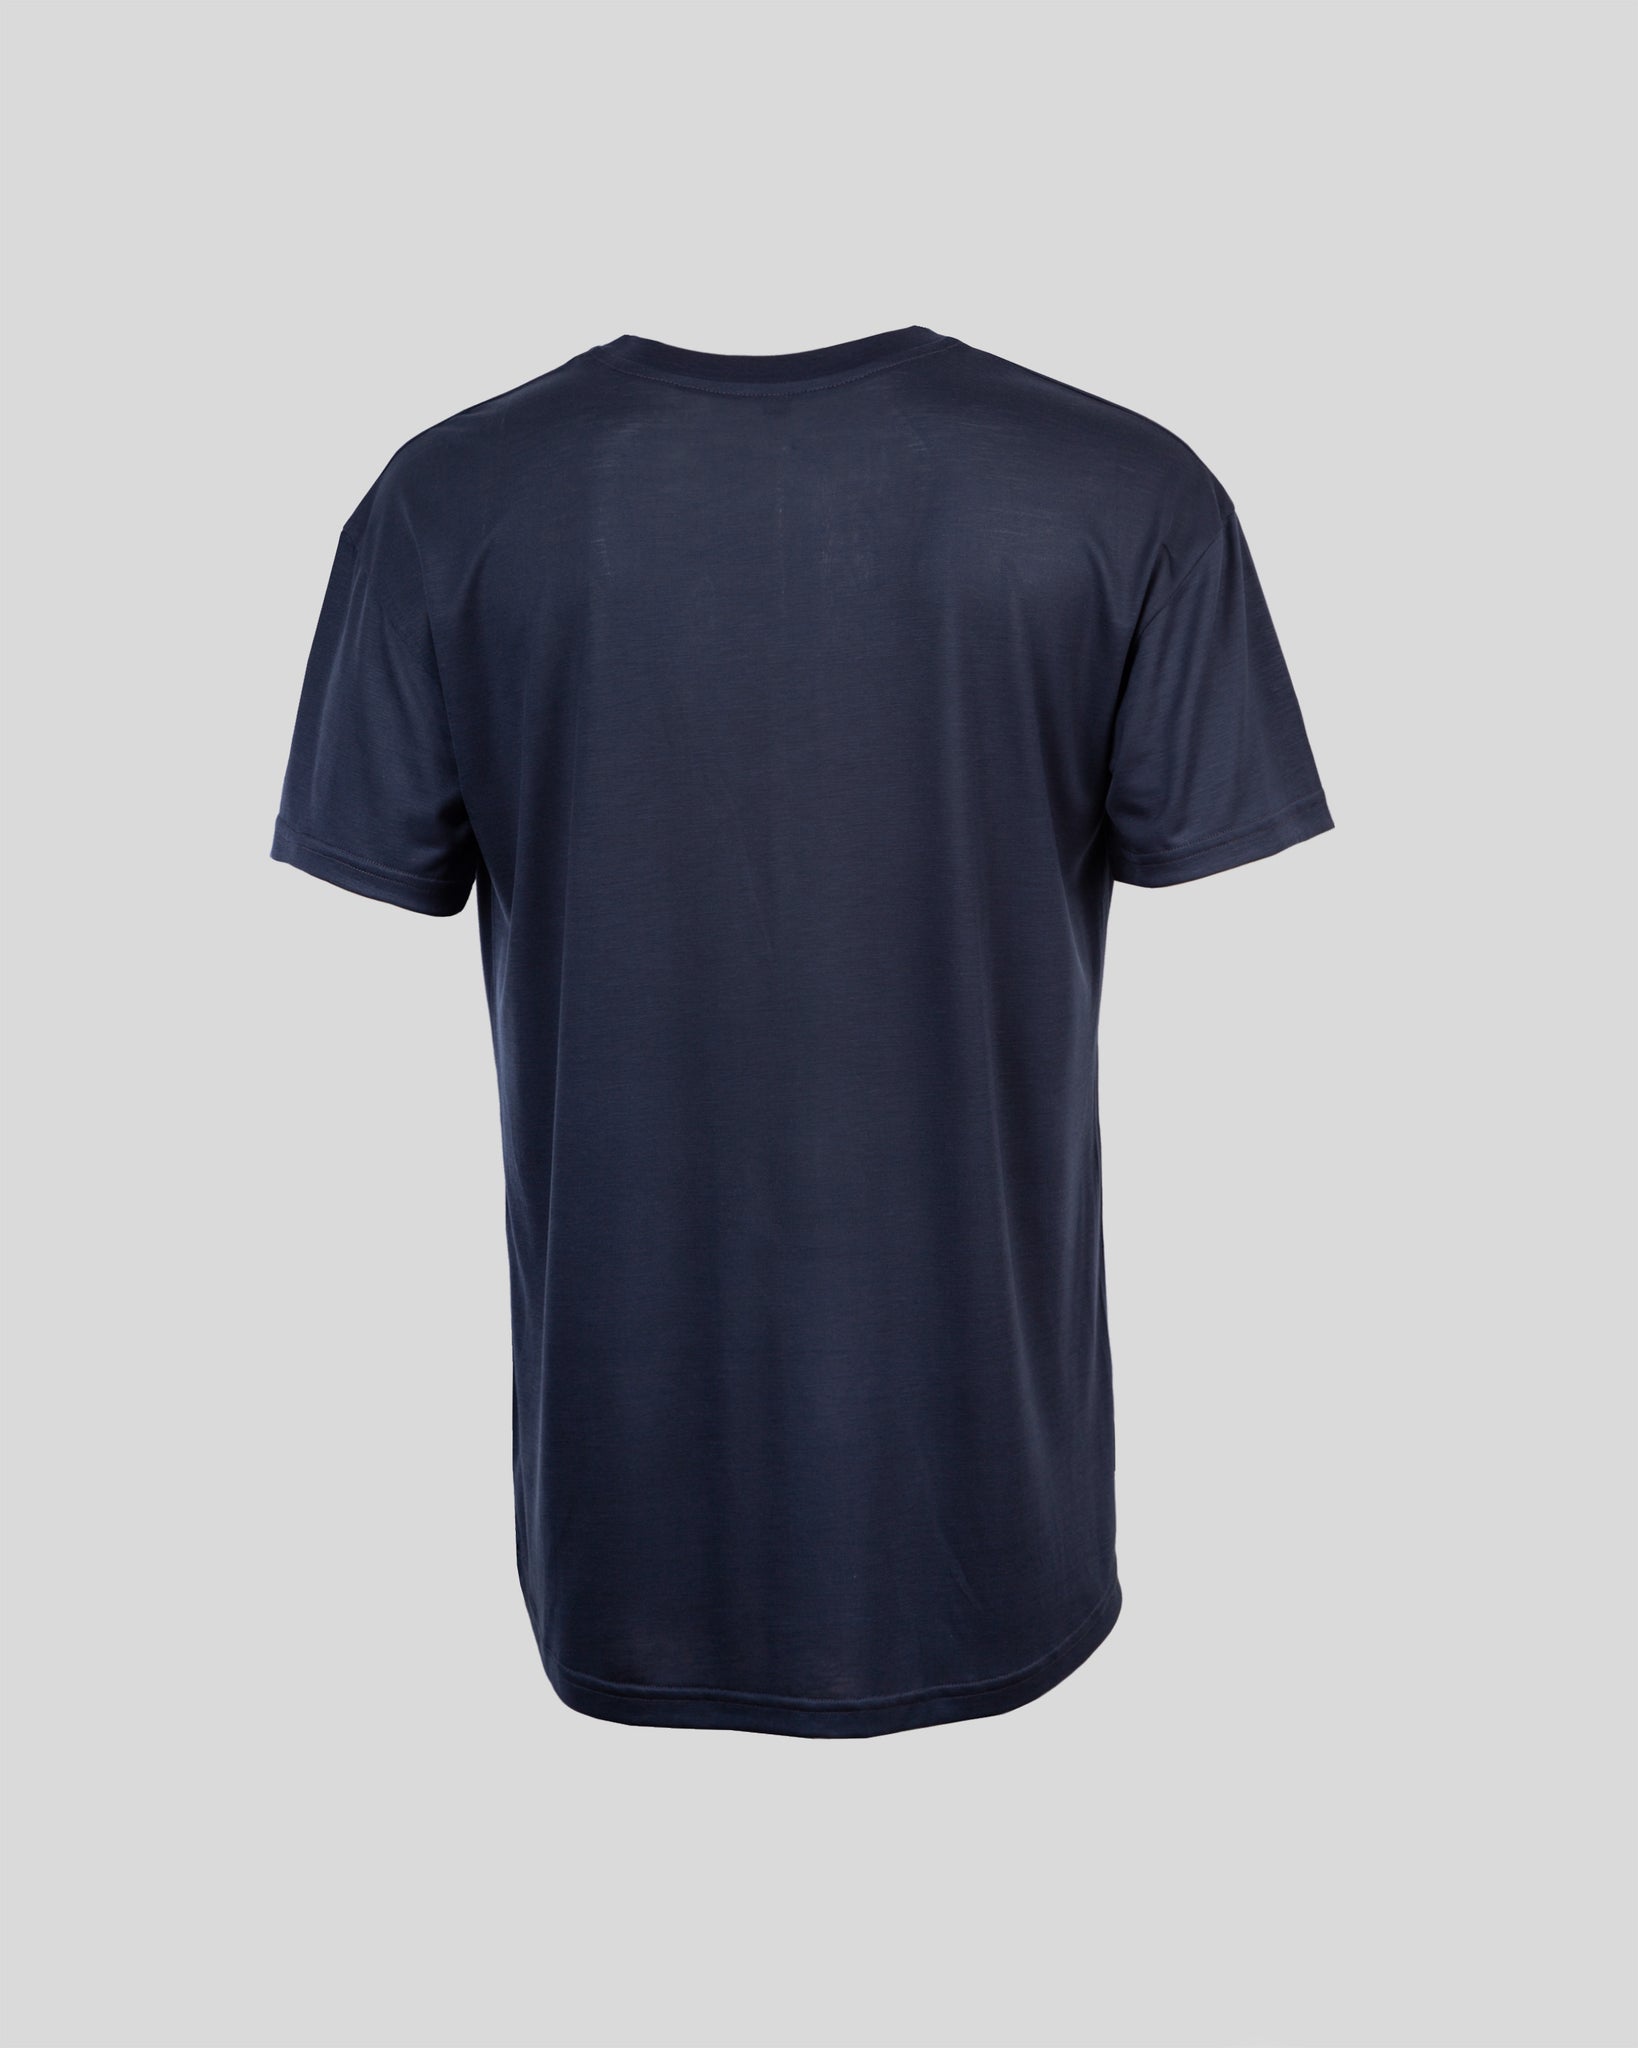 MTB-Shirt (MTS02)